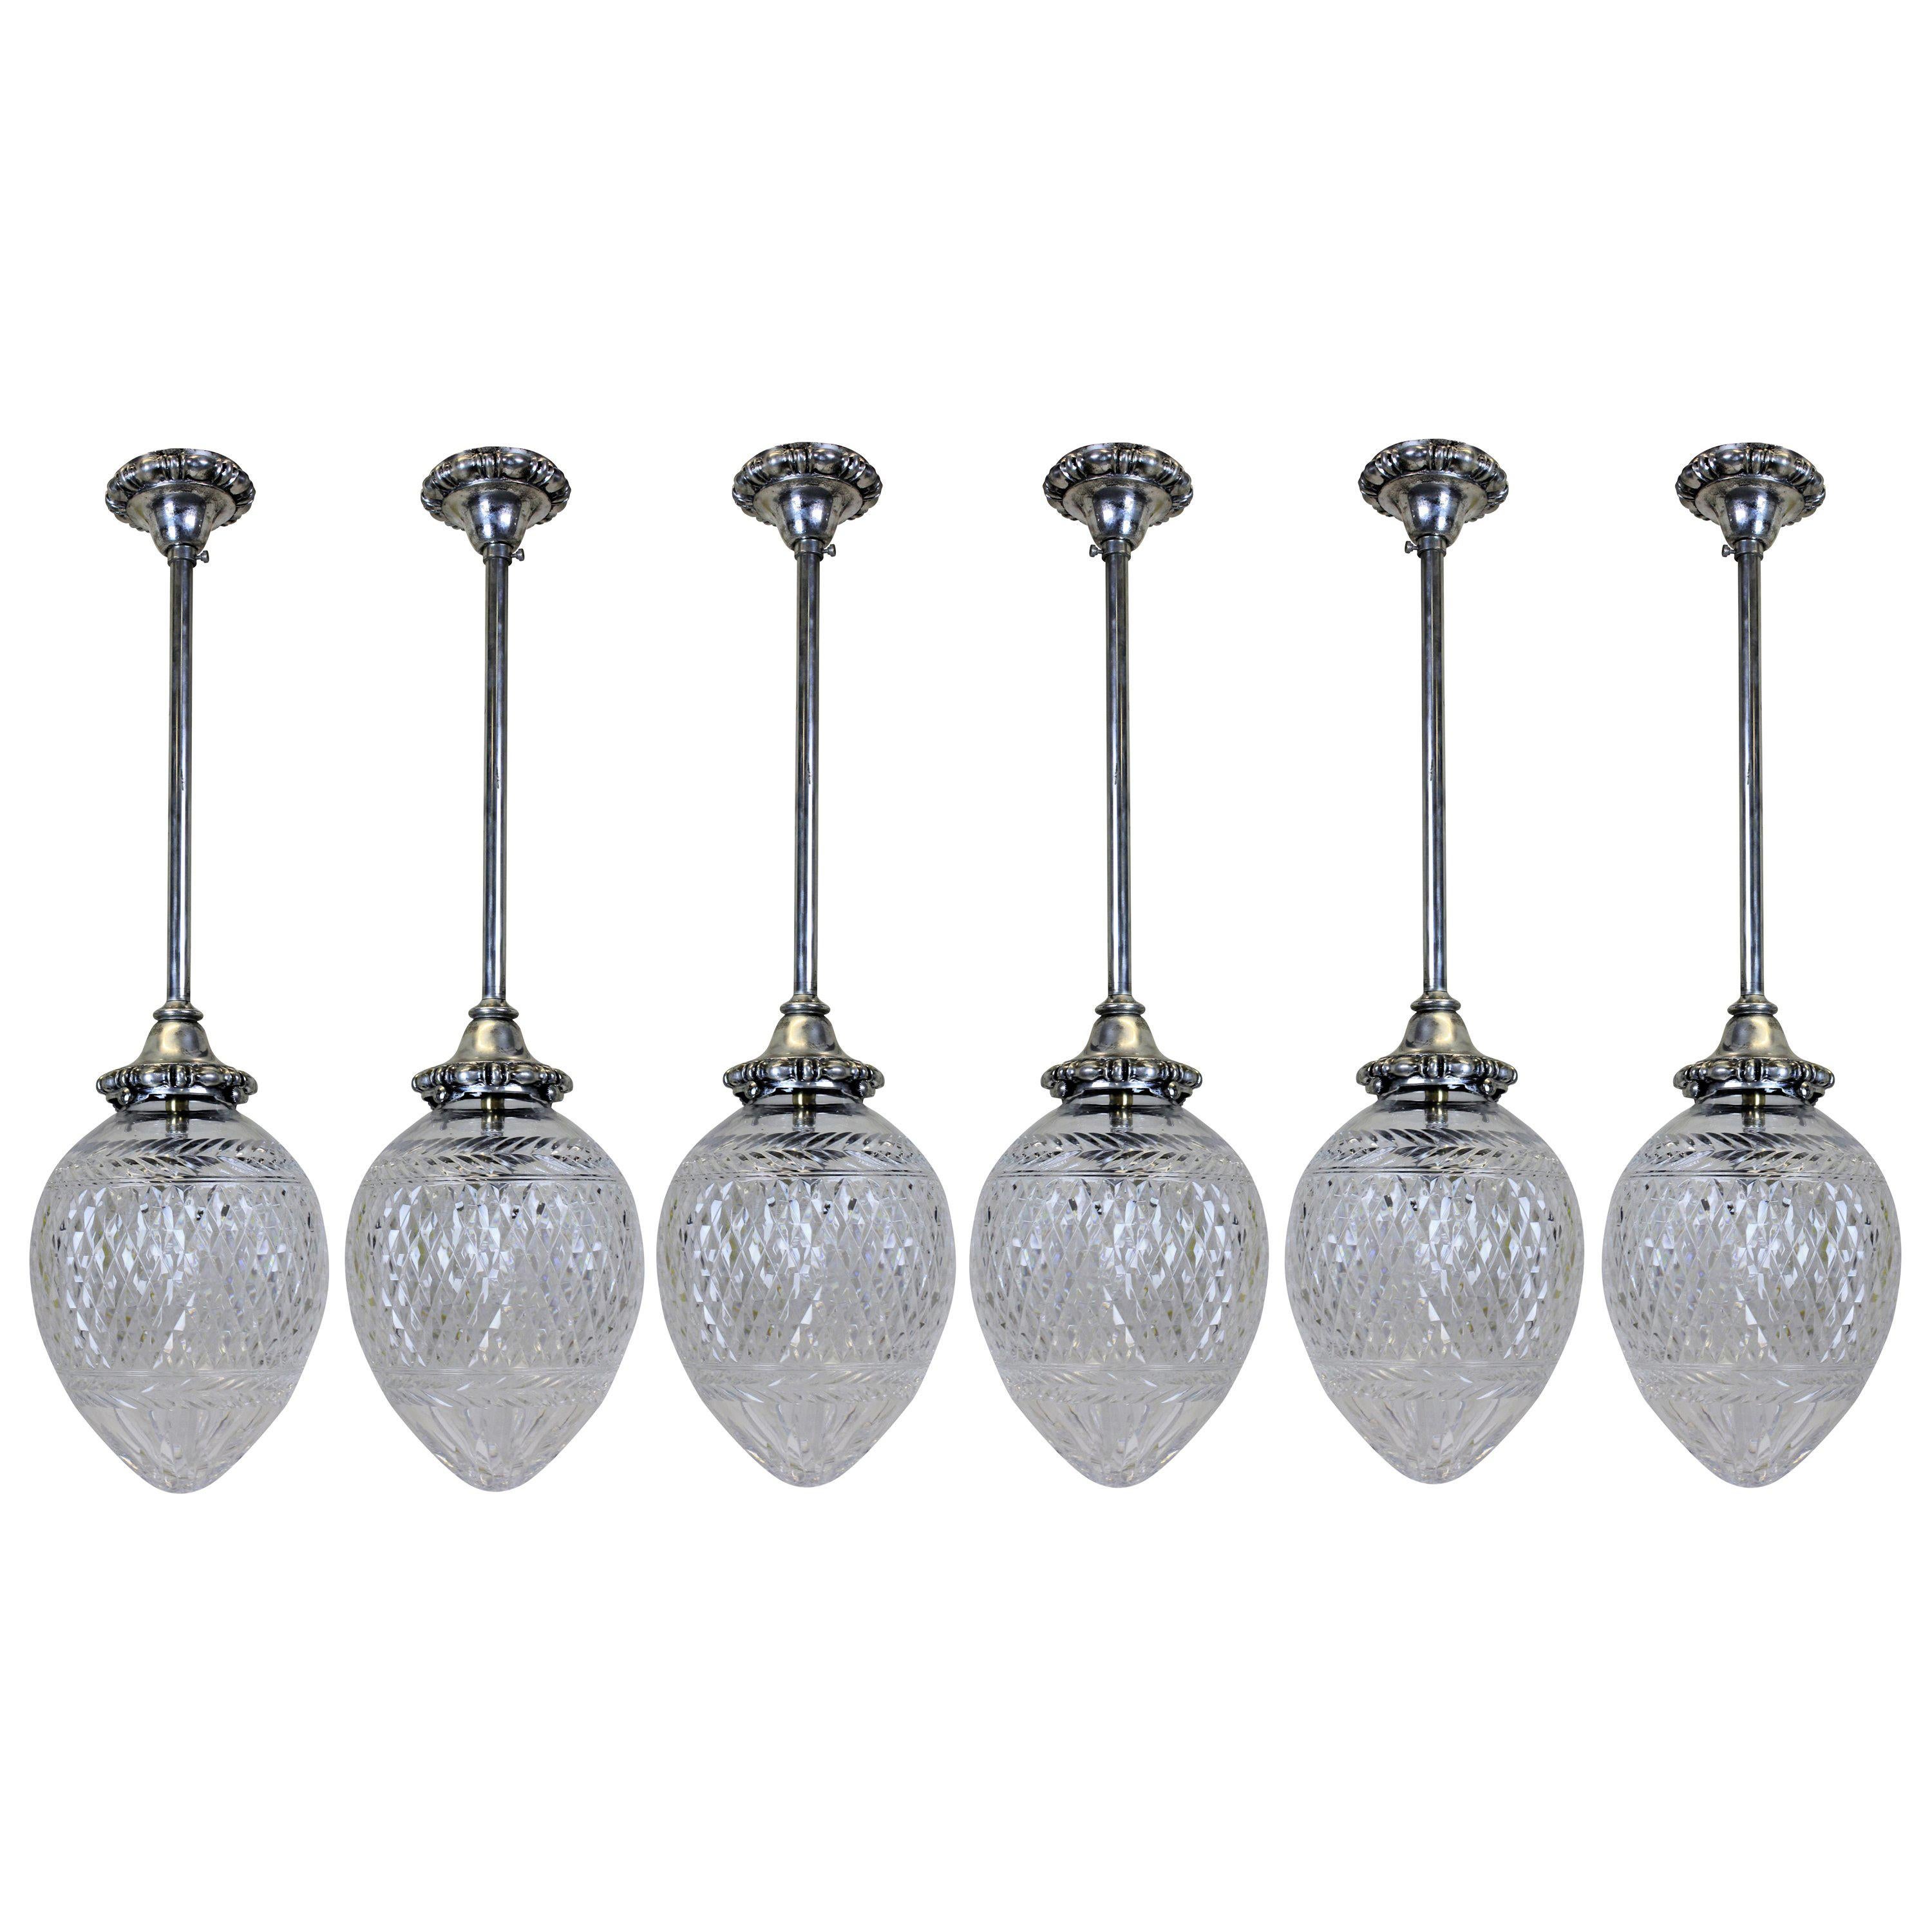 Set of Six Edwardian Silver and Cut Glass Hanging Pendant Lights